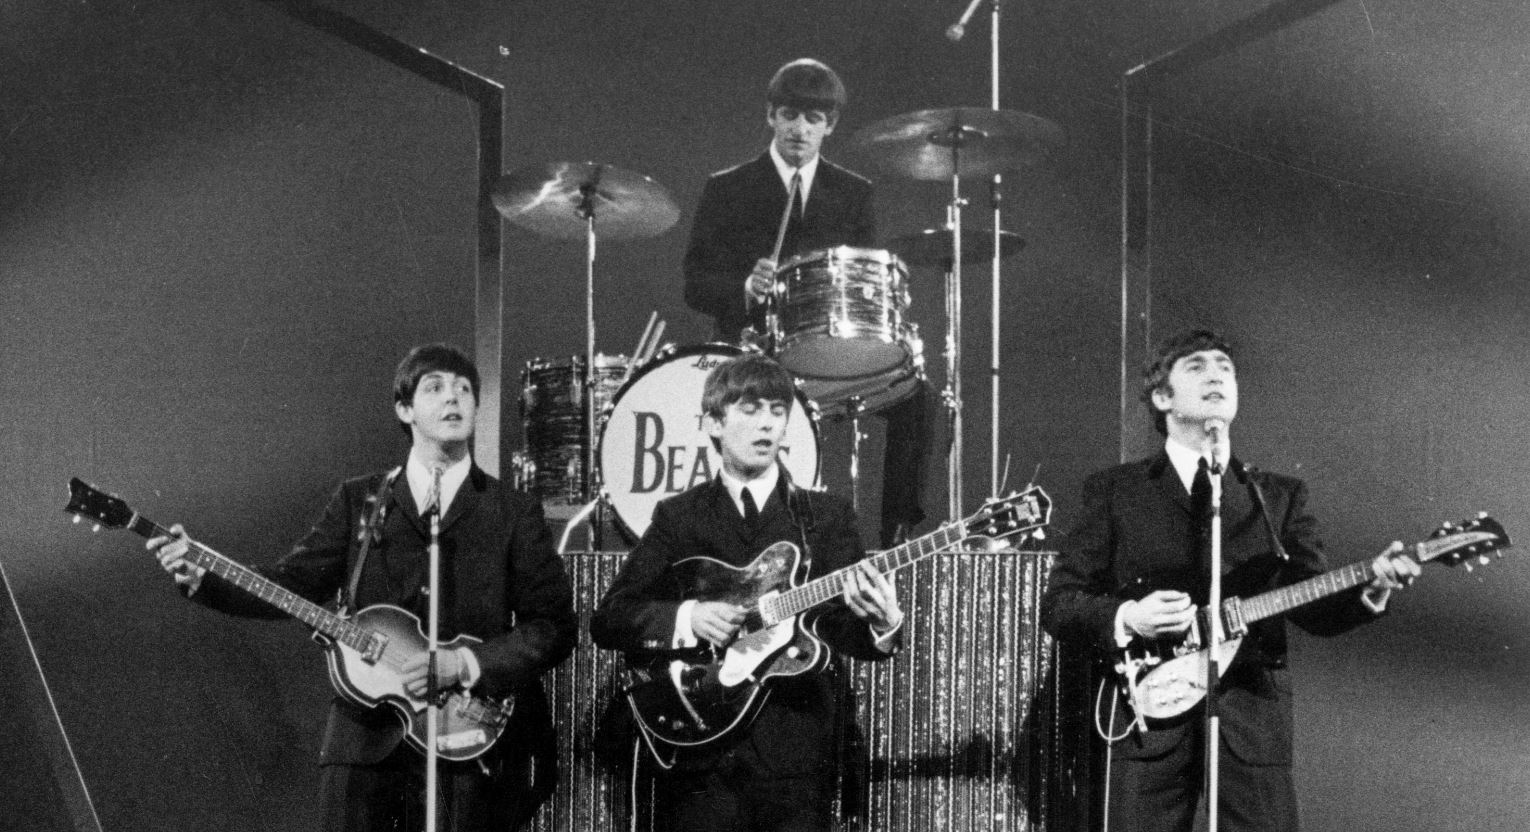 1. The Beatles